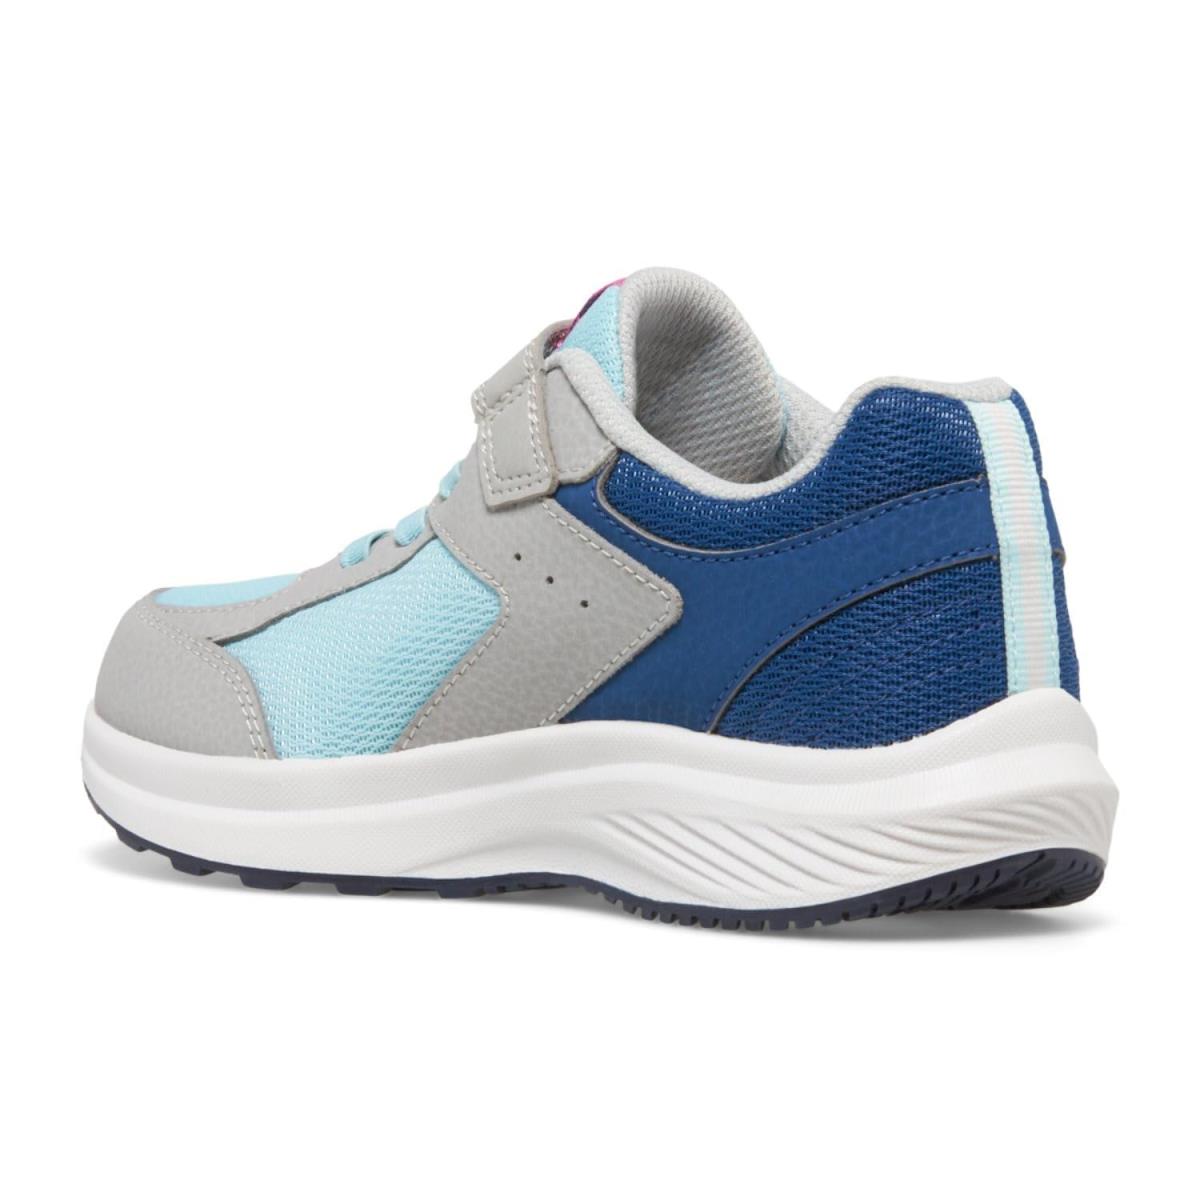 Saucony Unisex-child Jazz Sneaker Navy/Light Blue